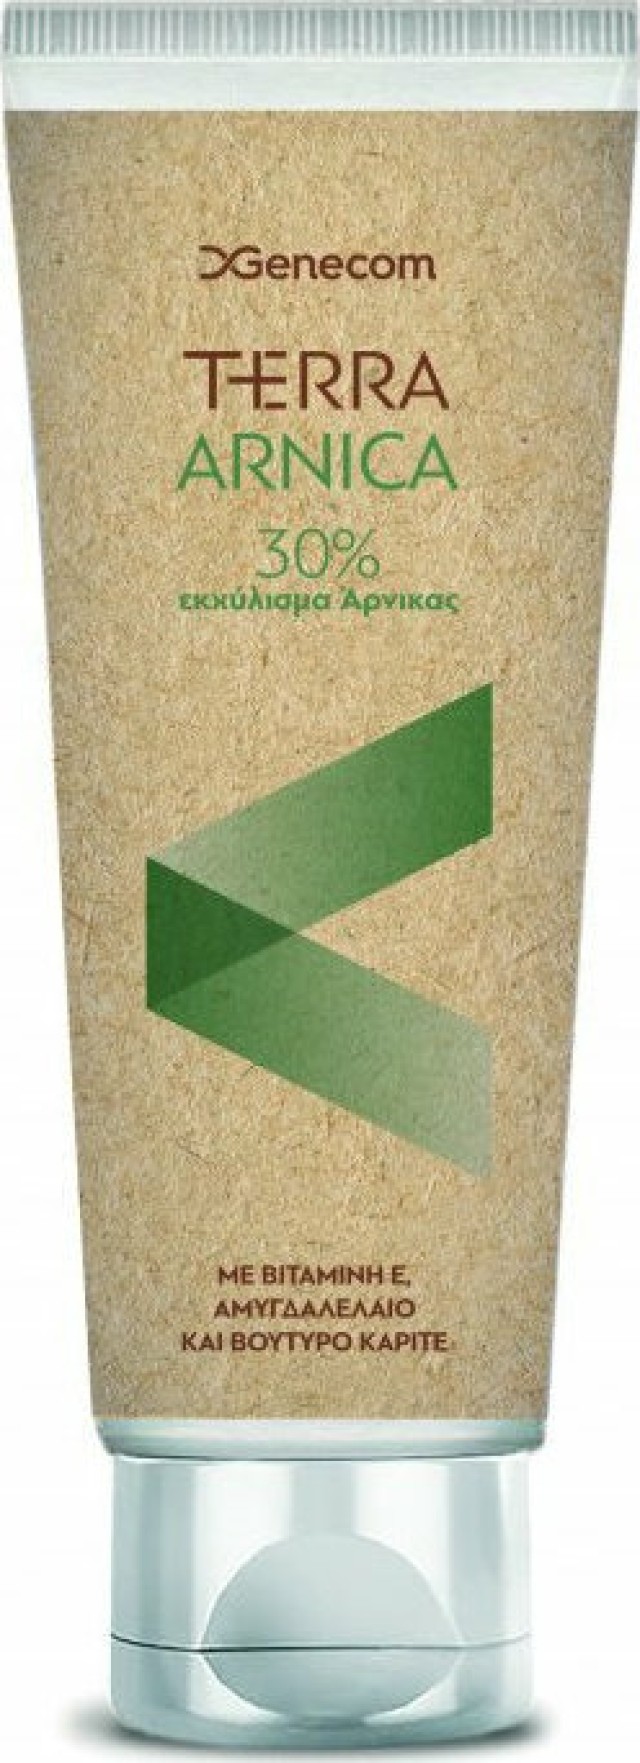 Genecom Terra Arnica Cream 30% Για Μυϊκούς Πόνους 75ml